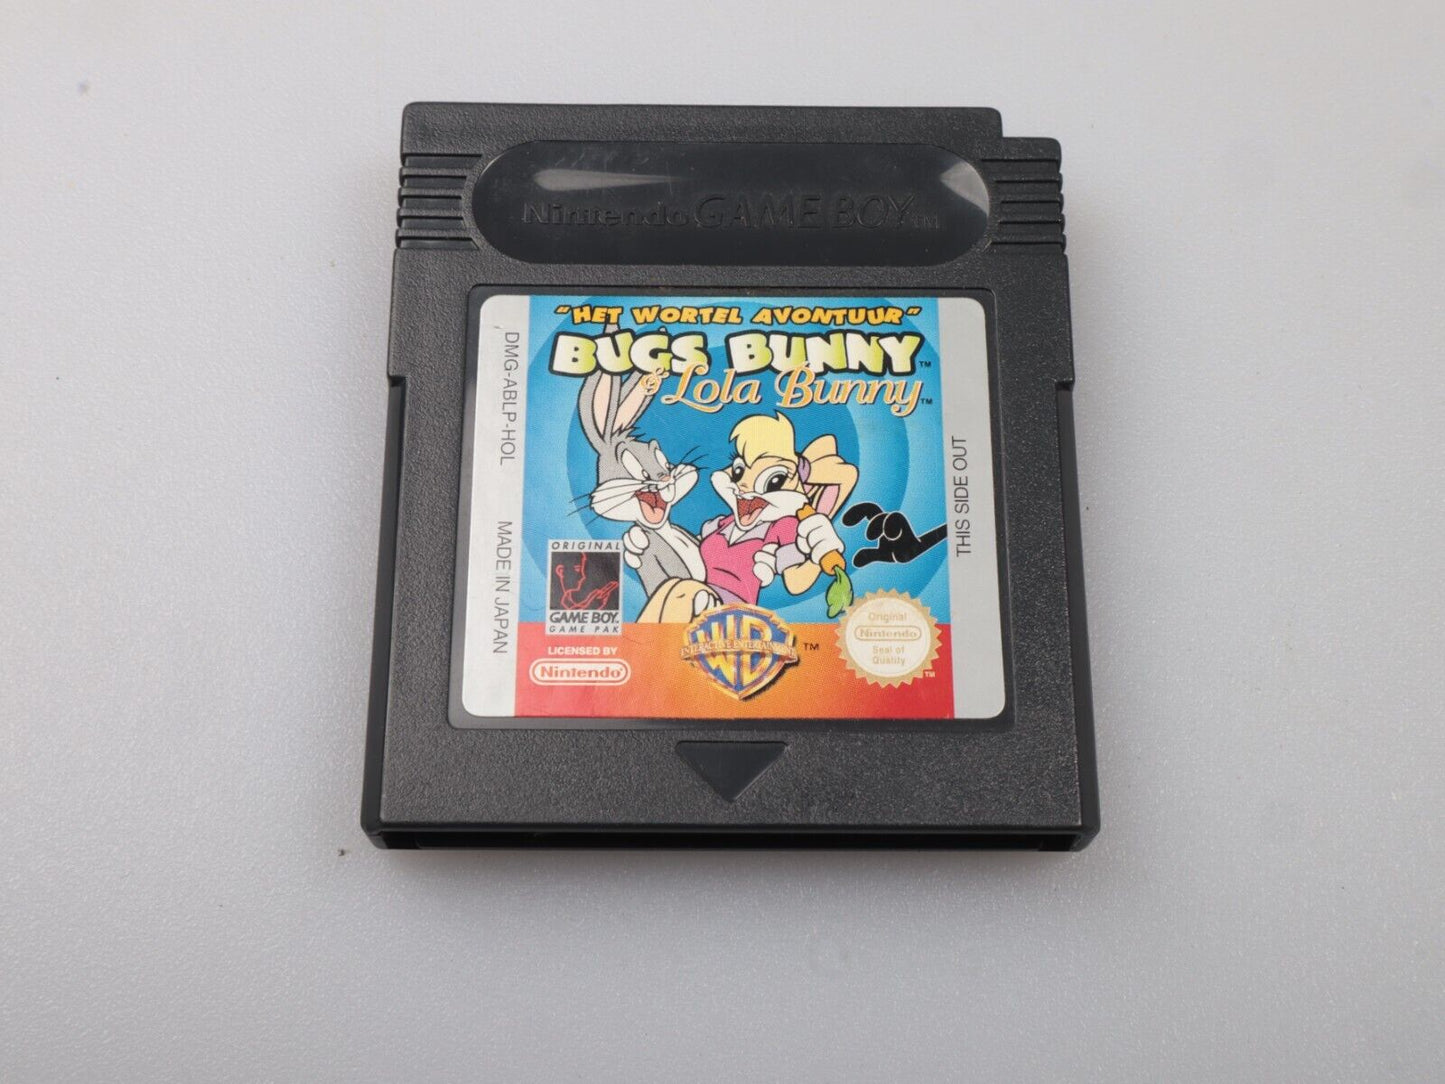 Gameboy | Bugs Bunny & Lola Bunny Het Wortel Avontuur | HOL | Nintendo Cartrigde